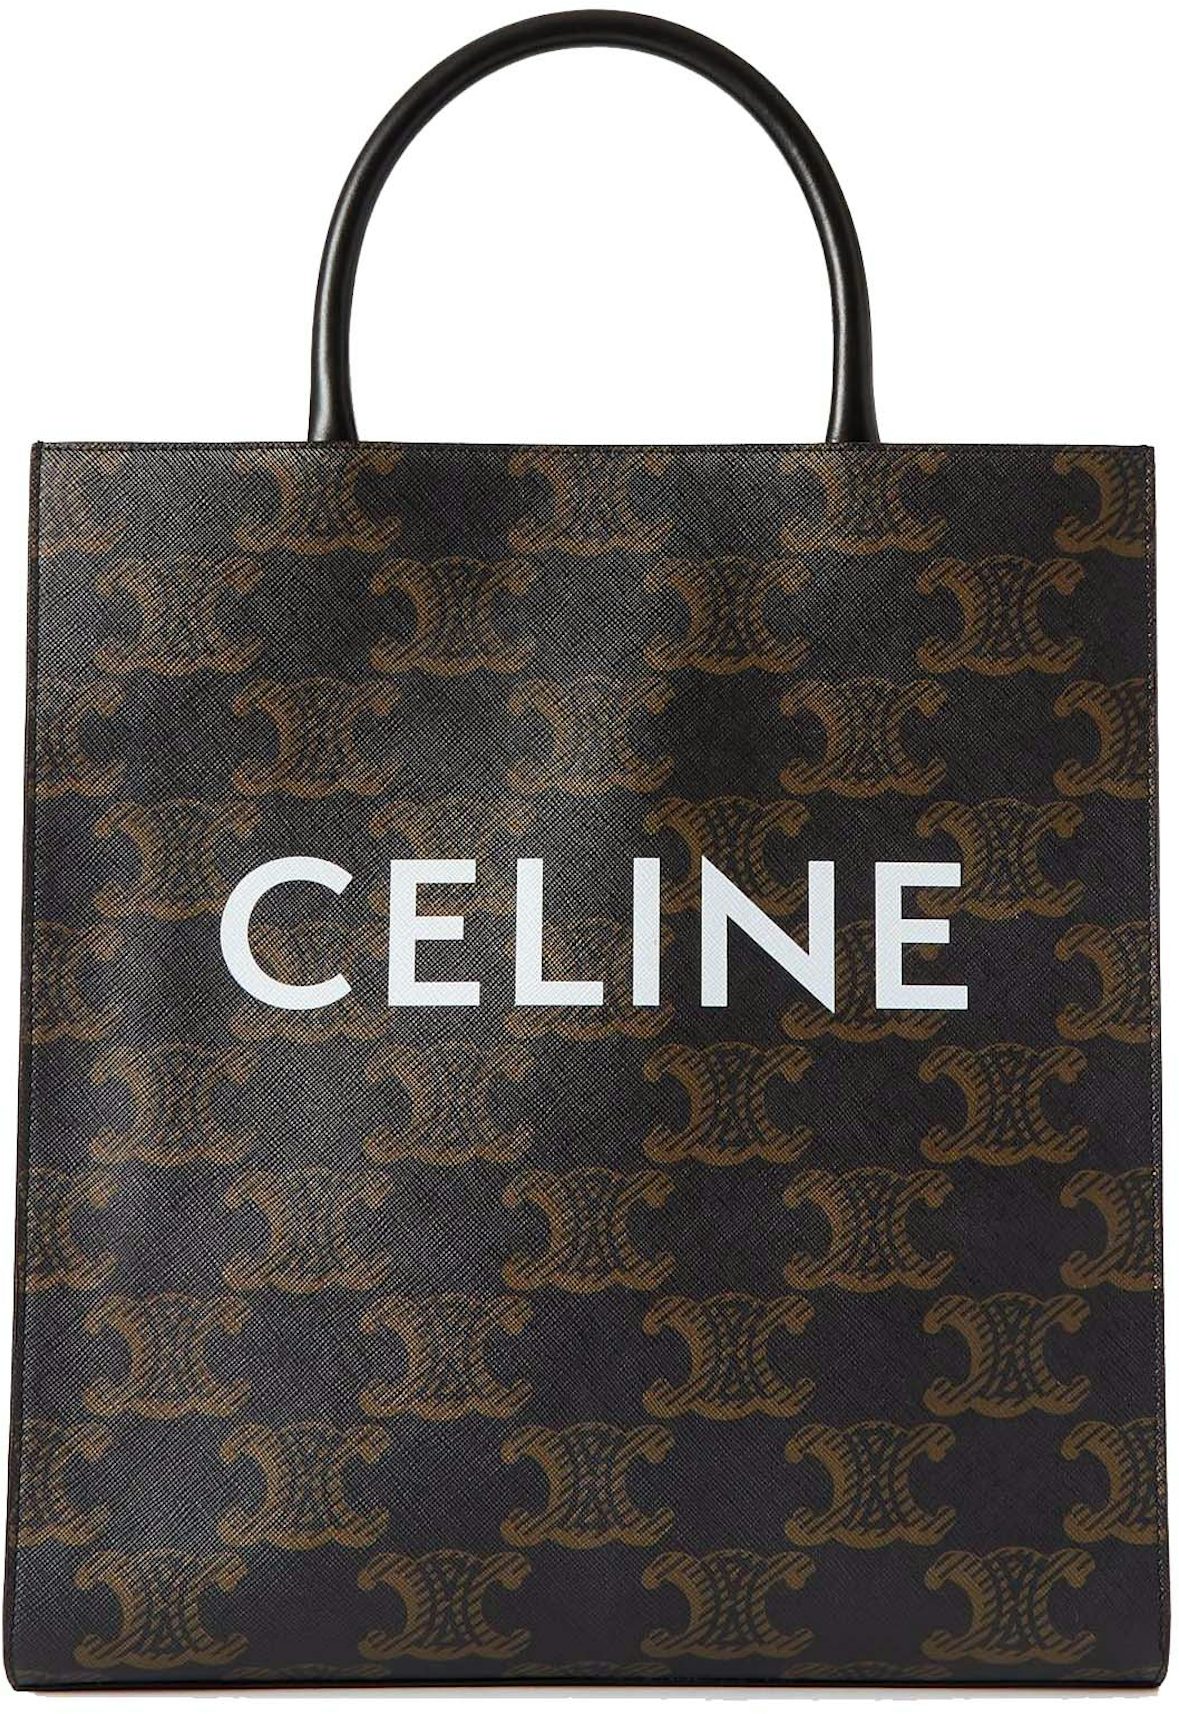 Celine Bag Authentic Brown Celine Alma Bag 